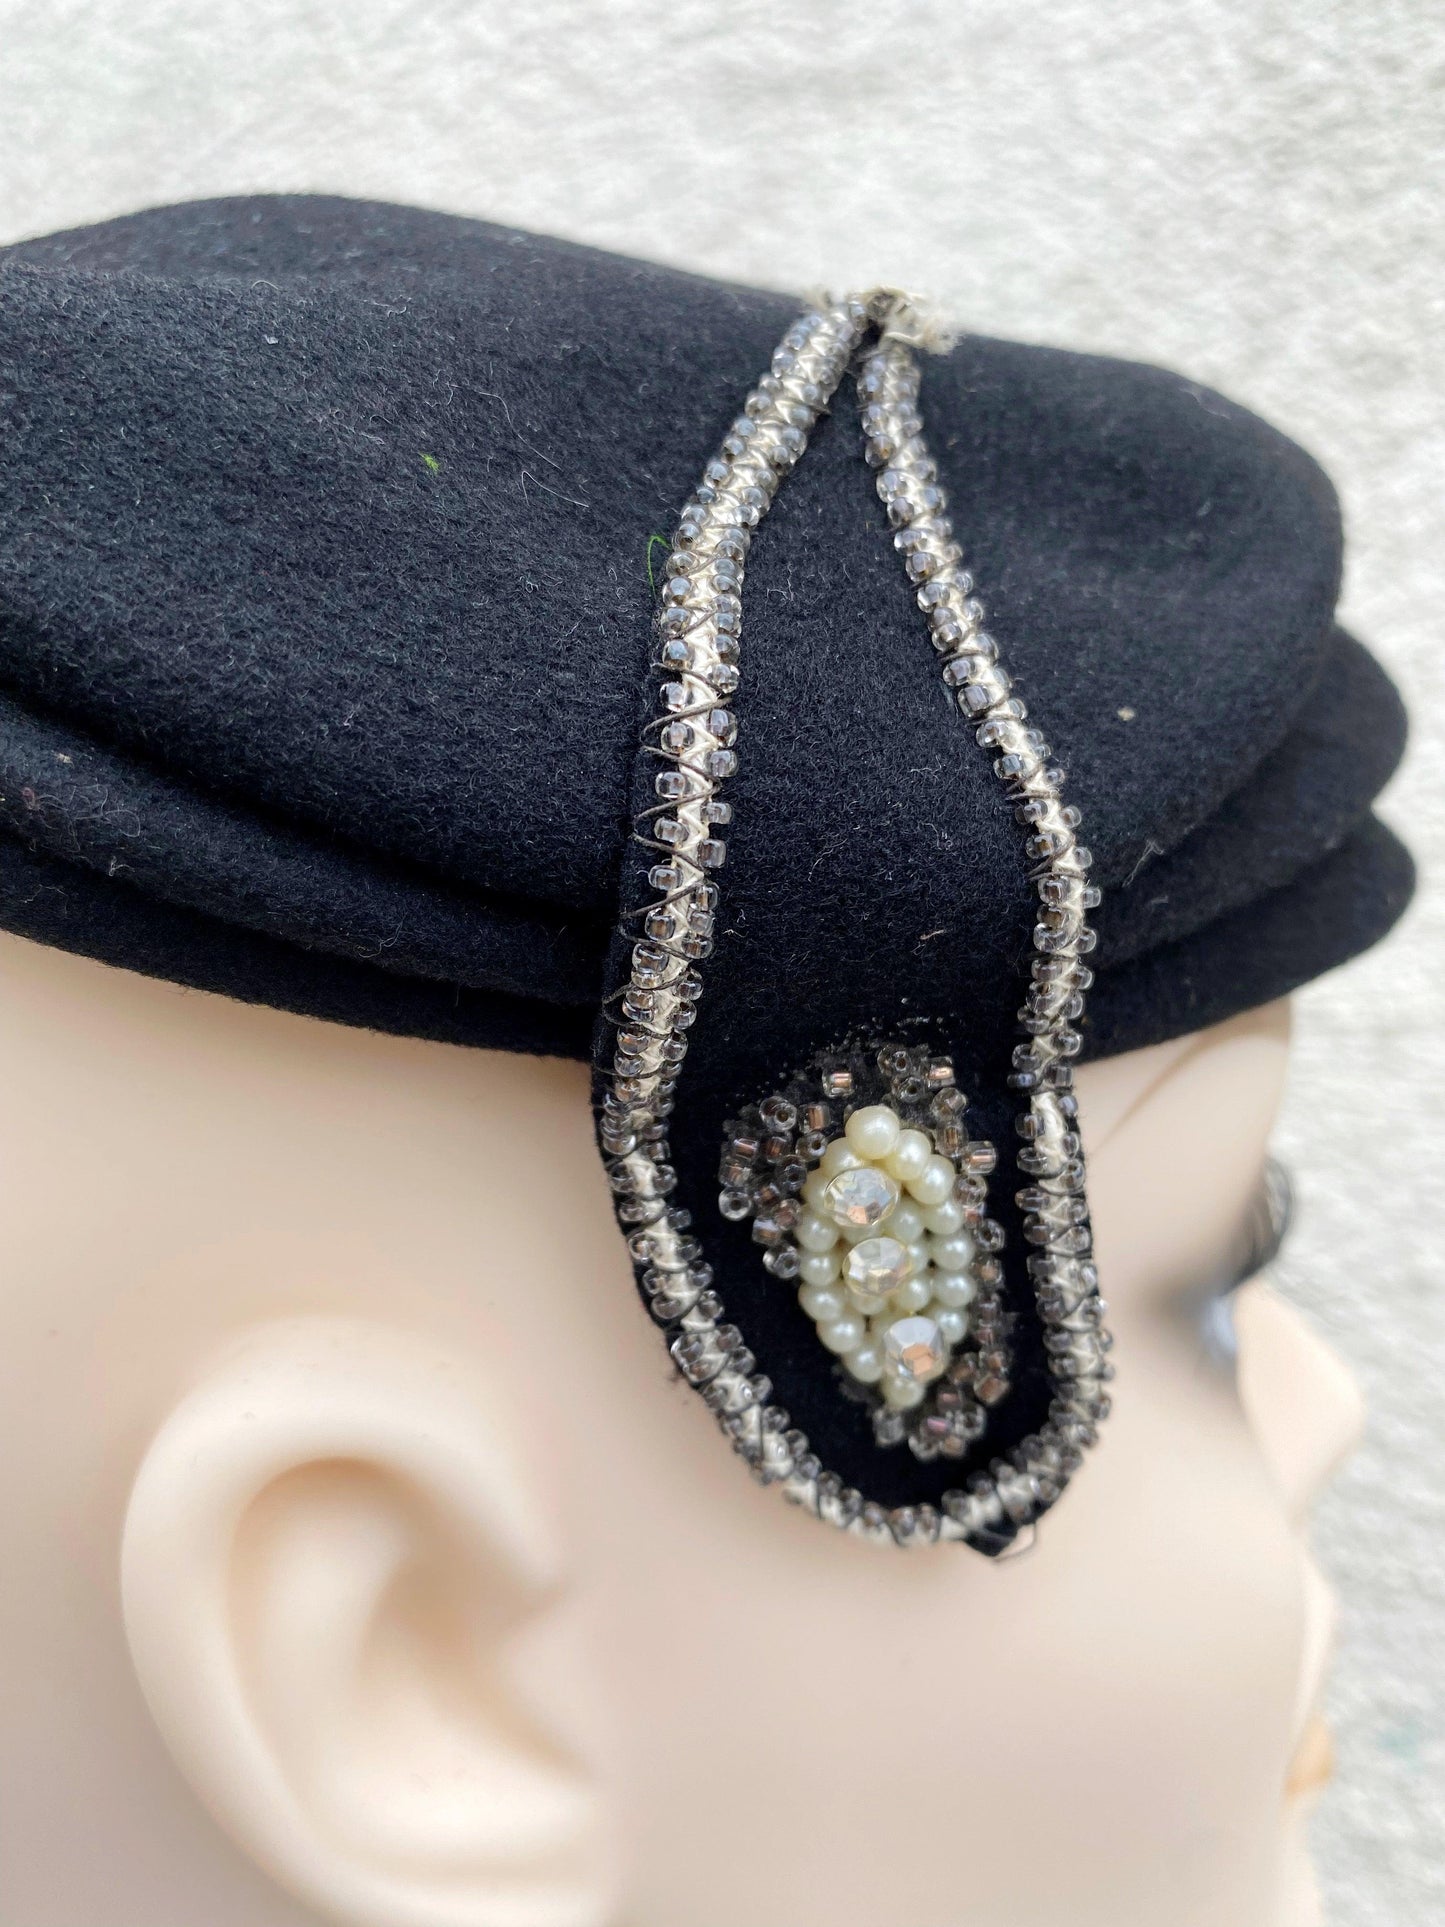 Vintage Black Wool Hat with Rhinestone Embellishments - A Walk Thru Time Vintage